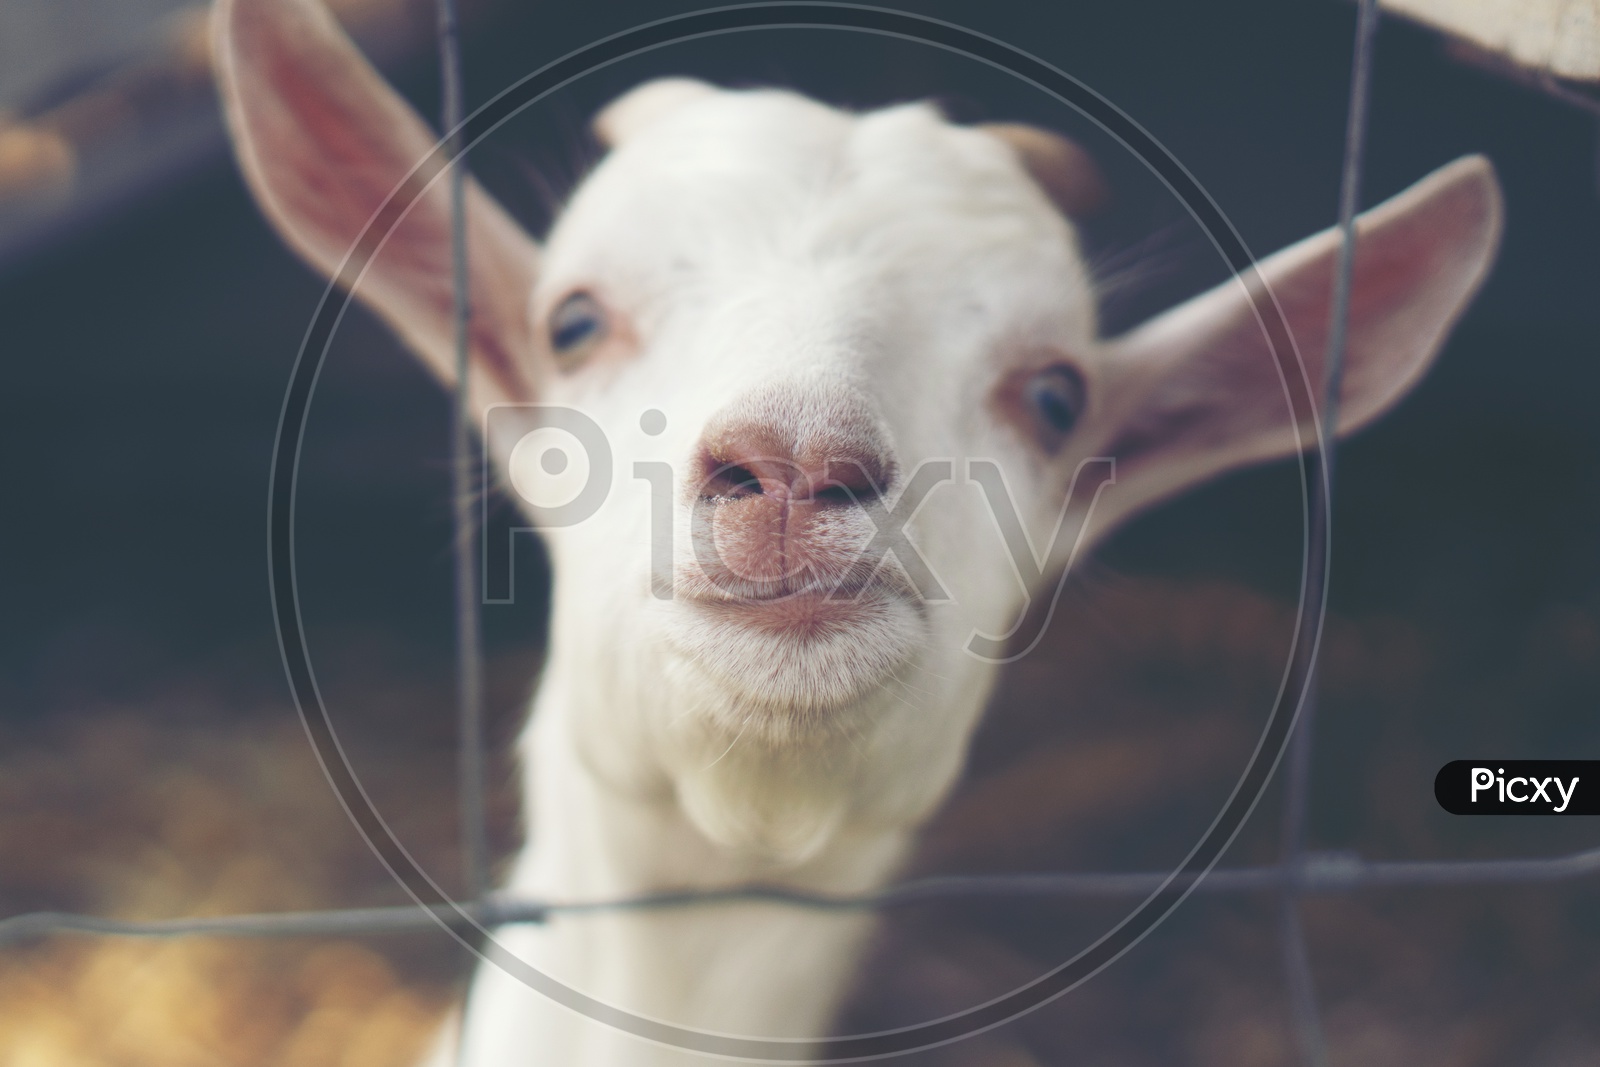 Goats In an Organic Farm For Goat Milk